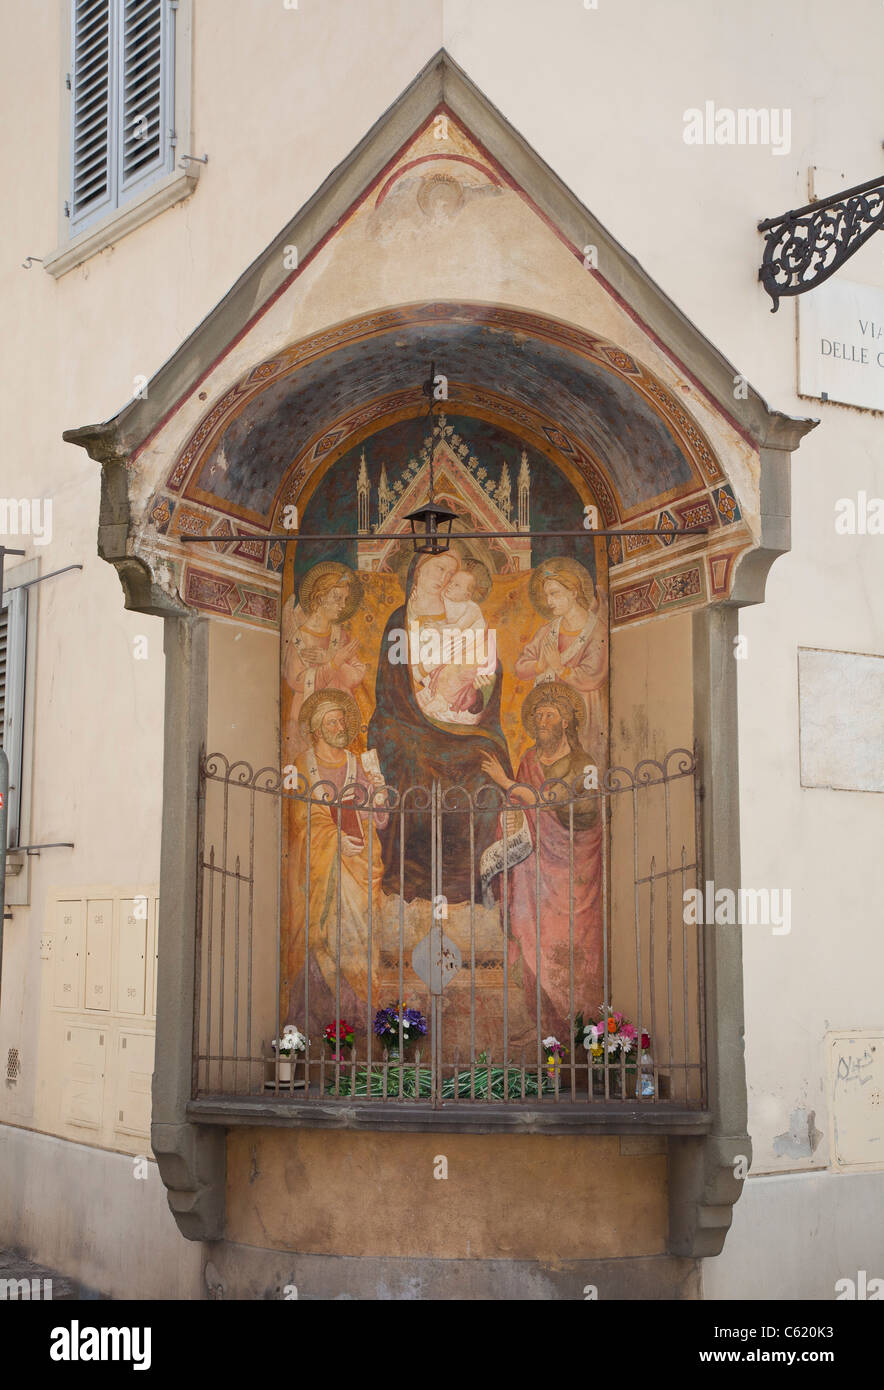 Madonna & child, religious street corner Icon, common in Florence, Italy. Stock Photo